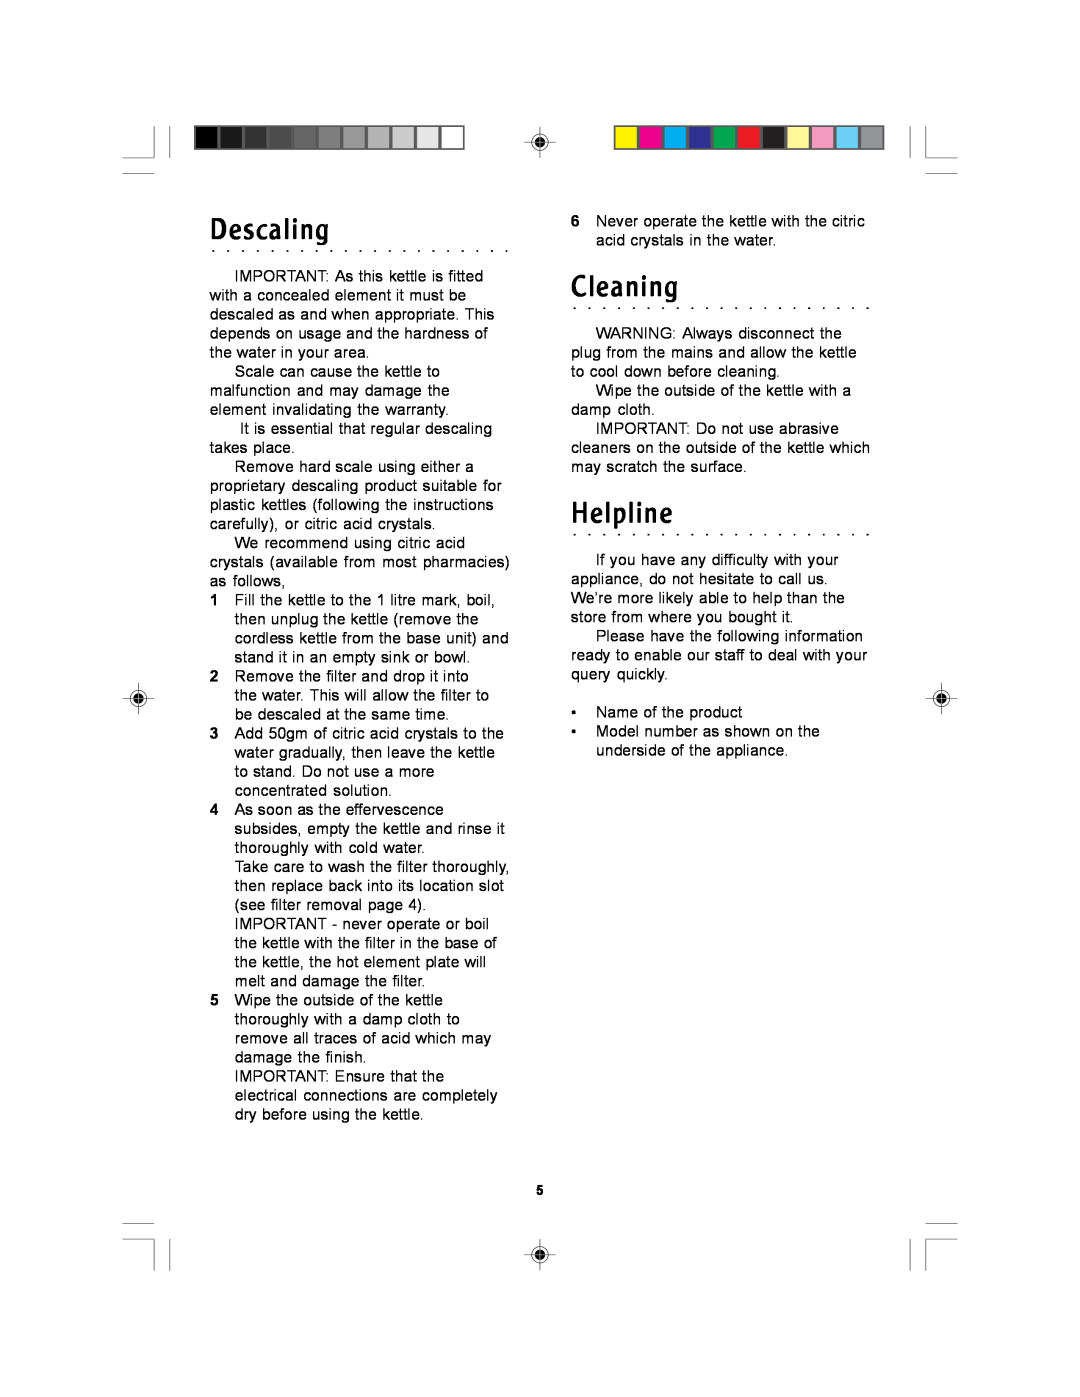 Morphy Richards Soprano kettle manual Descaling, Cleaning, Helpline 